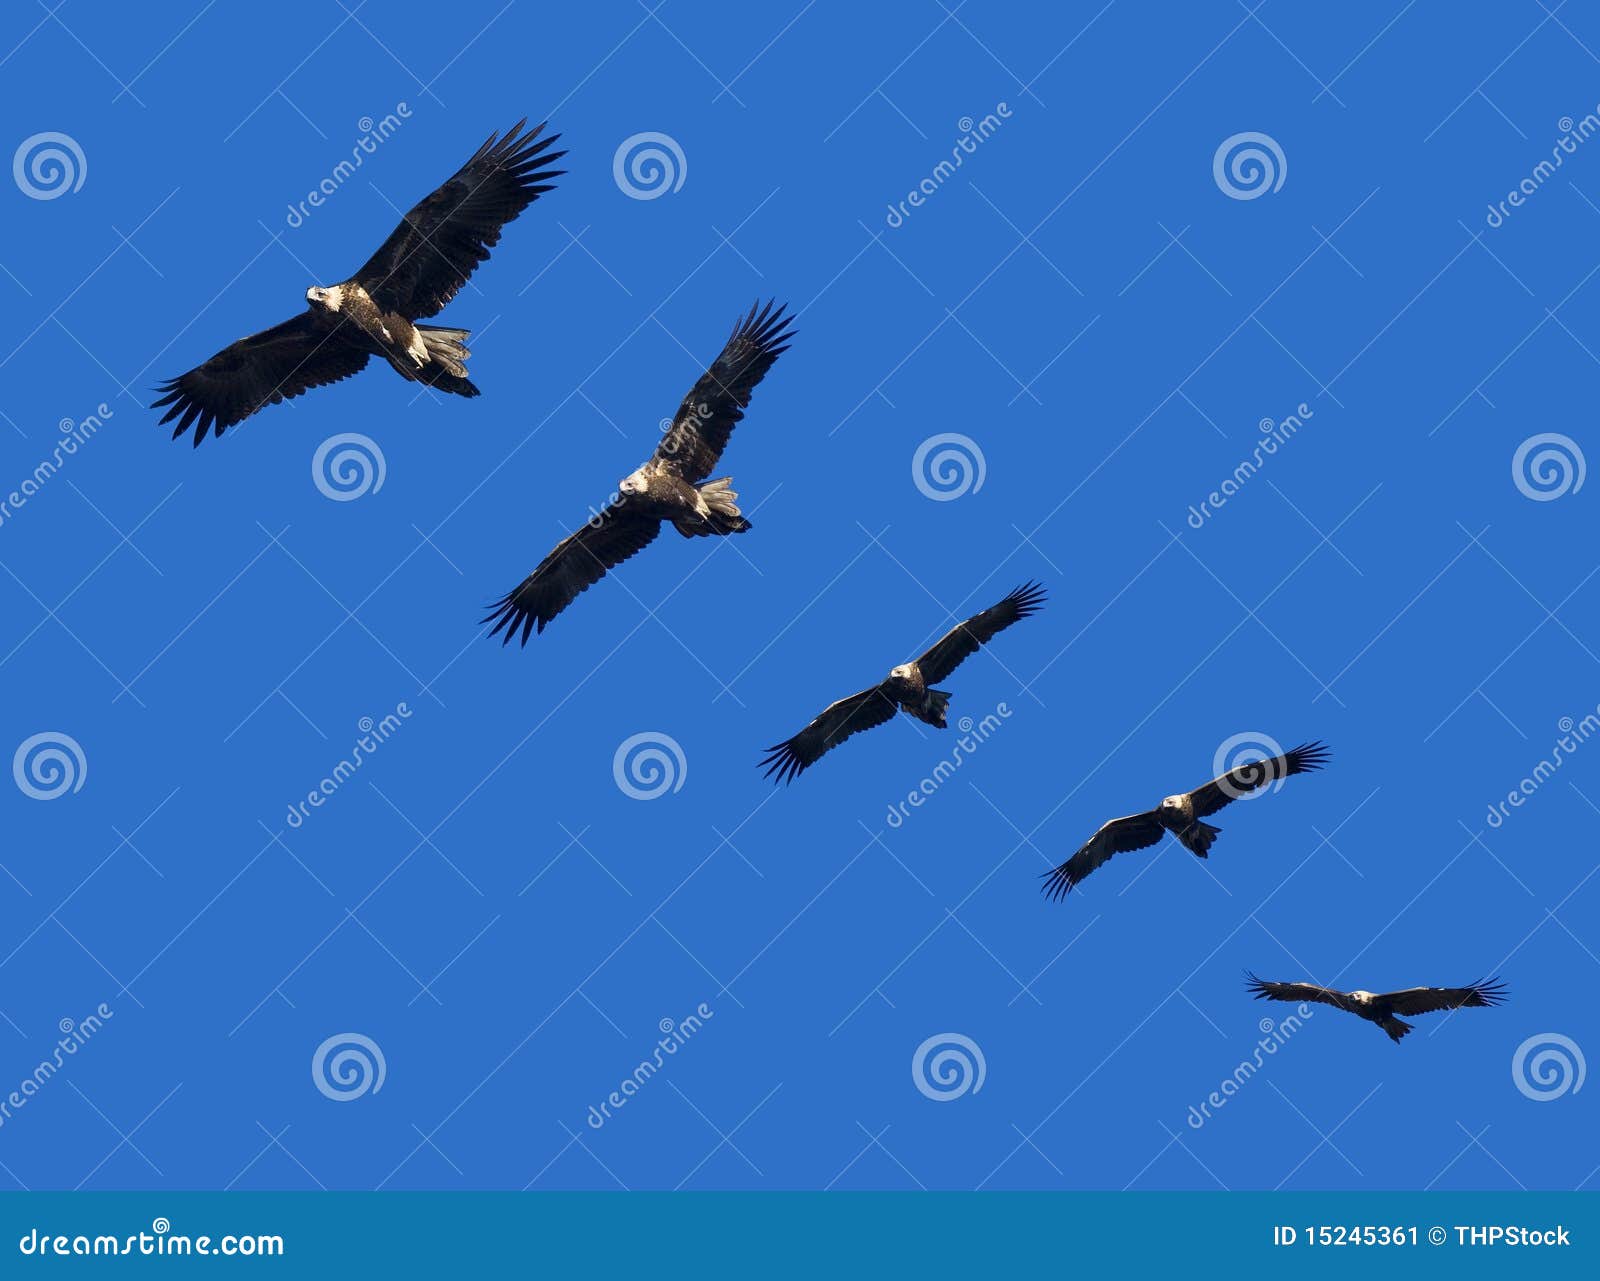 wege-tail eagle montage